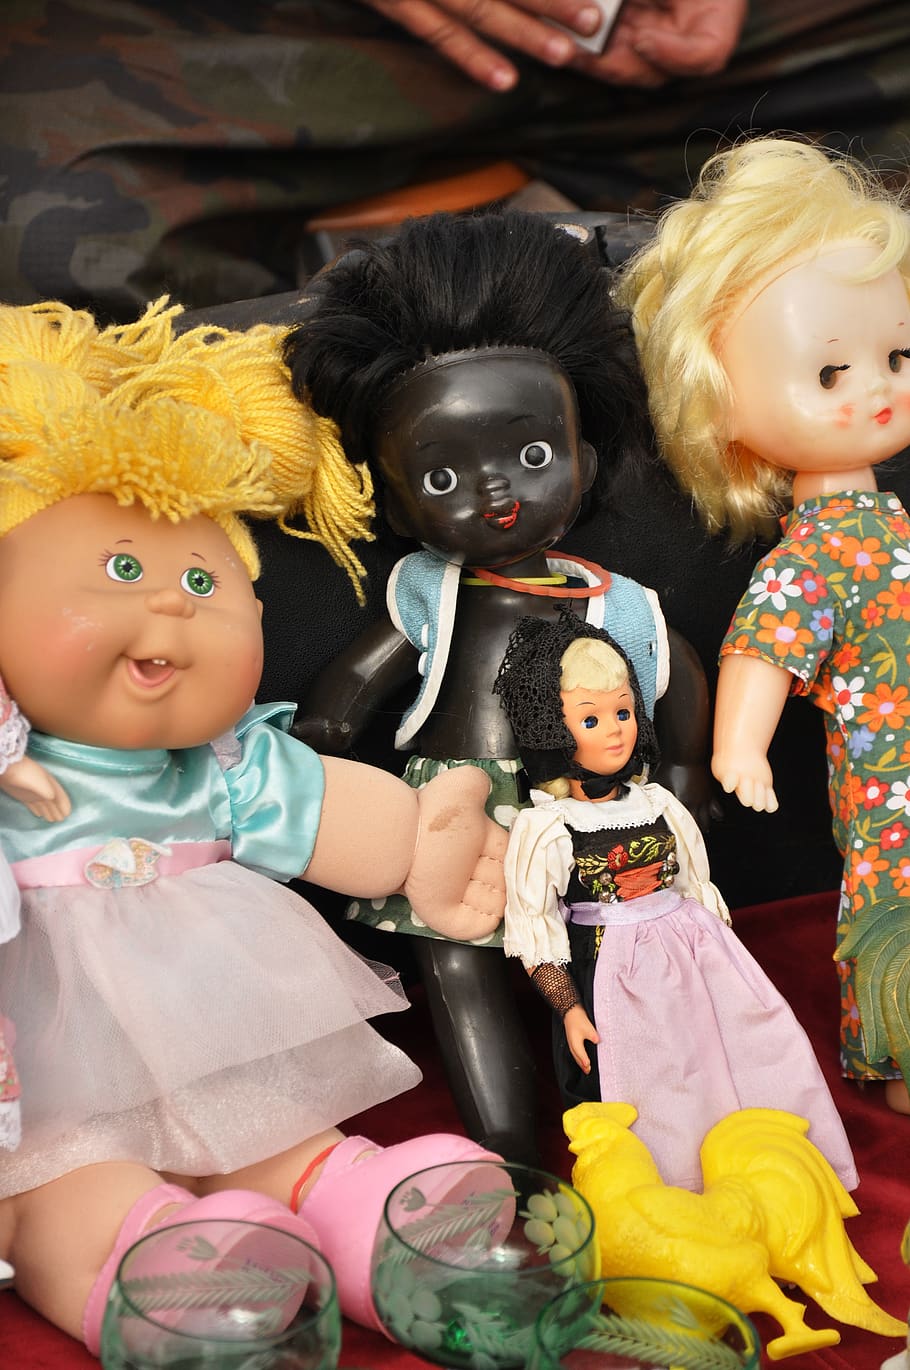 flea market, baby doll, bazaar, vintage, retro, toy, old, childhood, representation, doll